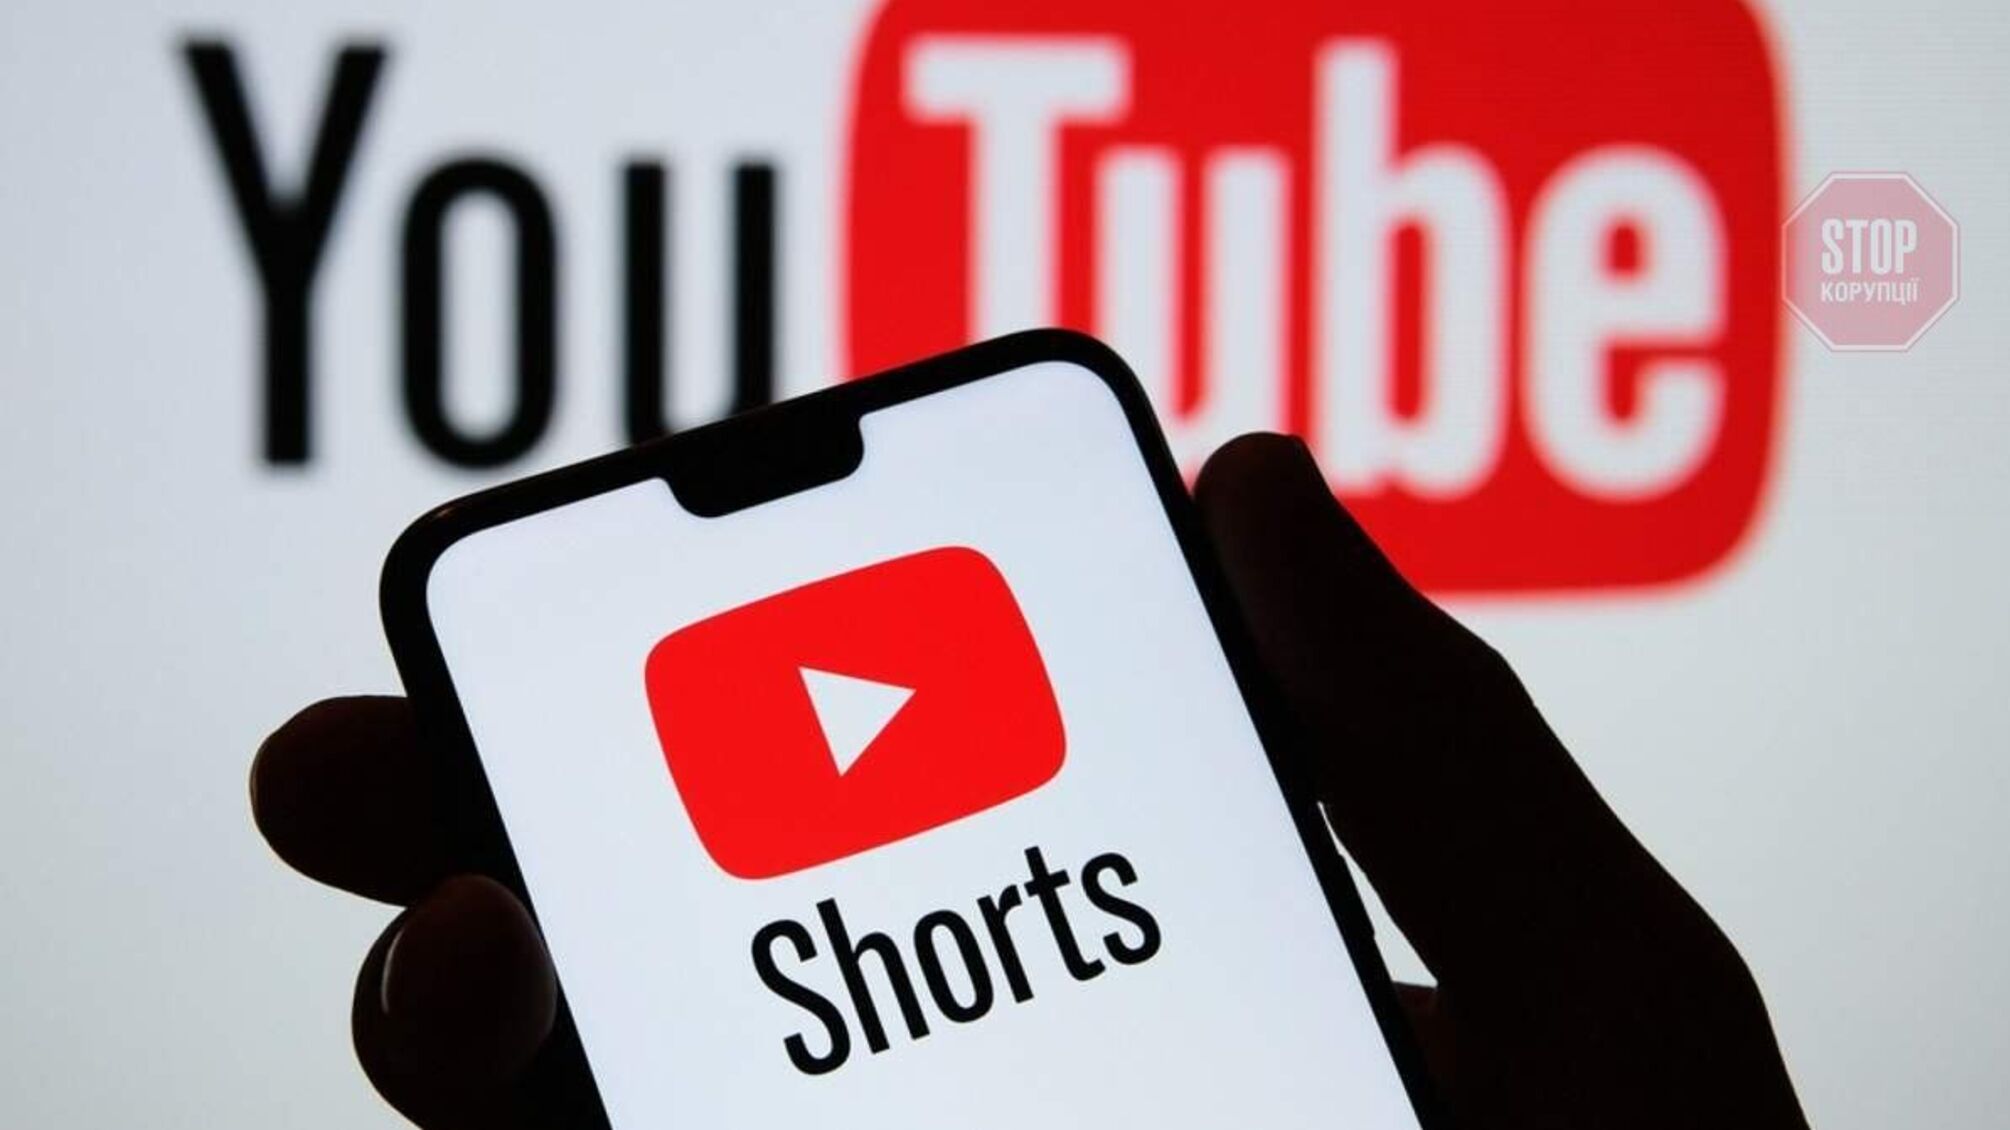 Аналог TikTok: YouTube Shorts теперь доступен и в Украине